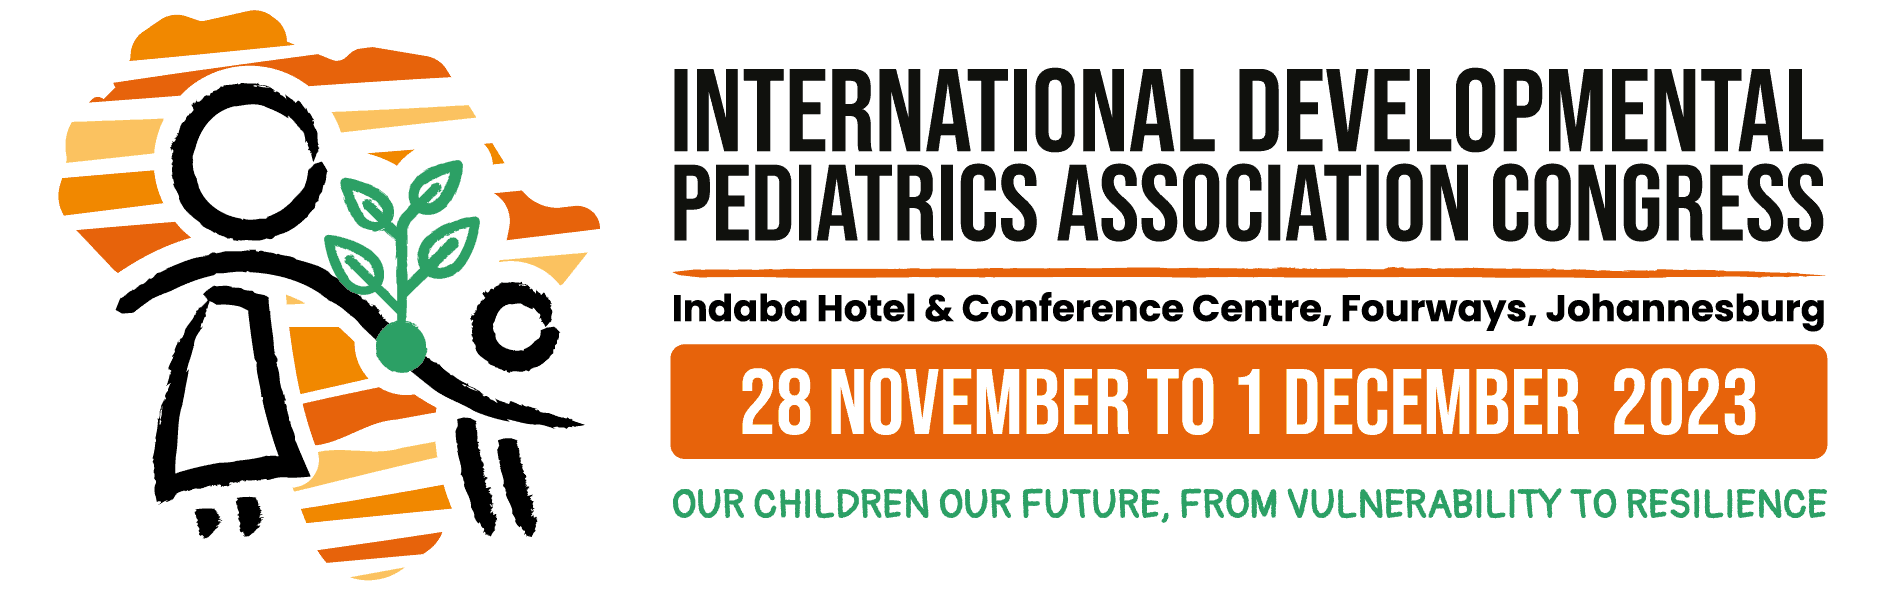 International Developmental Pediatrics Association